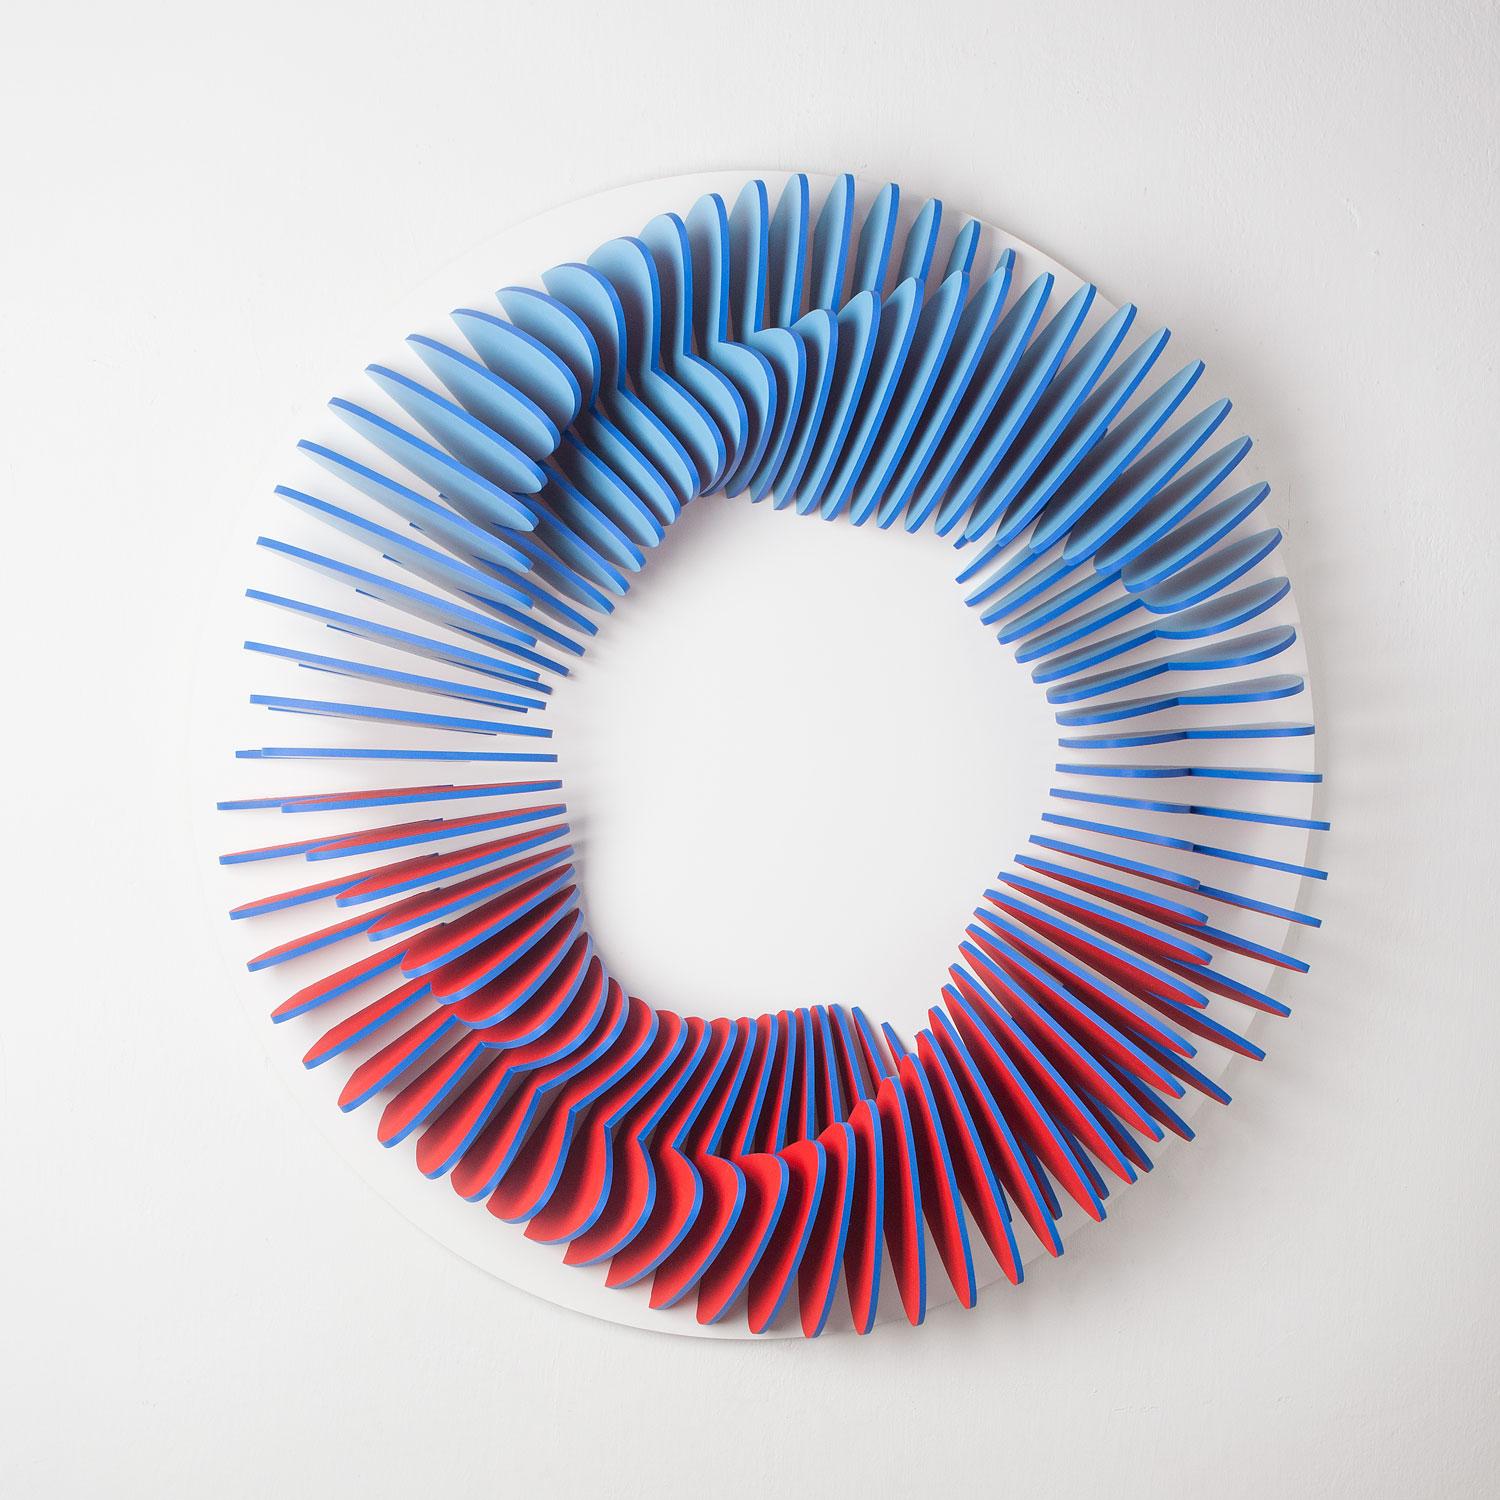 CC 100 - Blue red abstract geometric 3D wall circular sculpture - Abstract Geometric Mixed Media Art by Anna Kruhelska